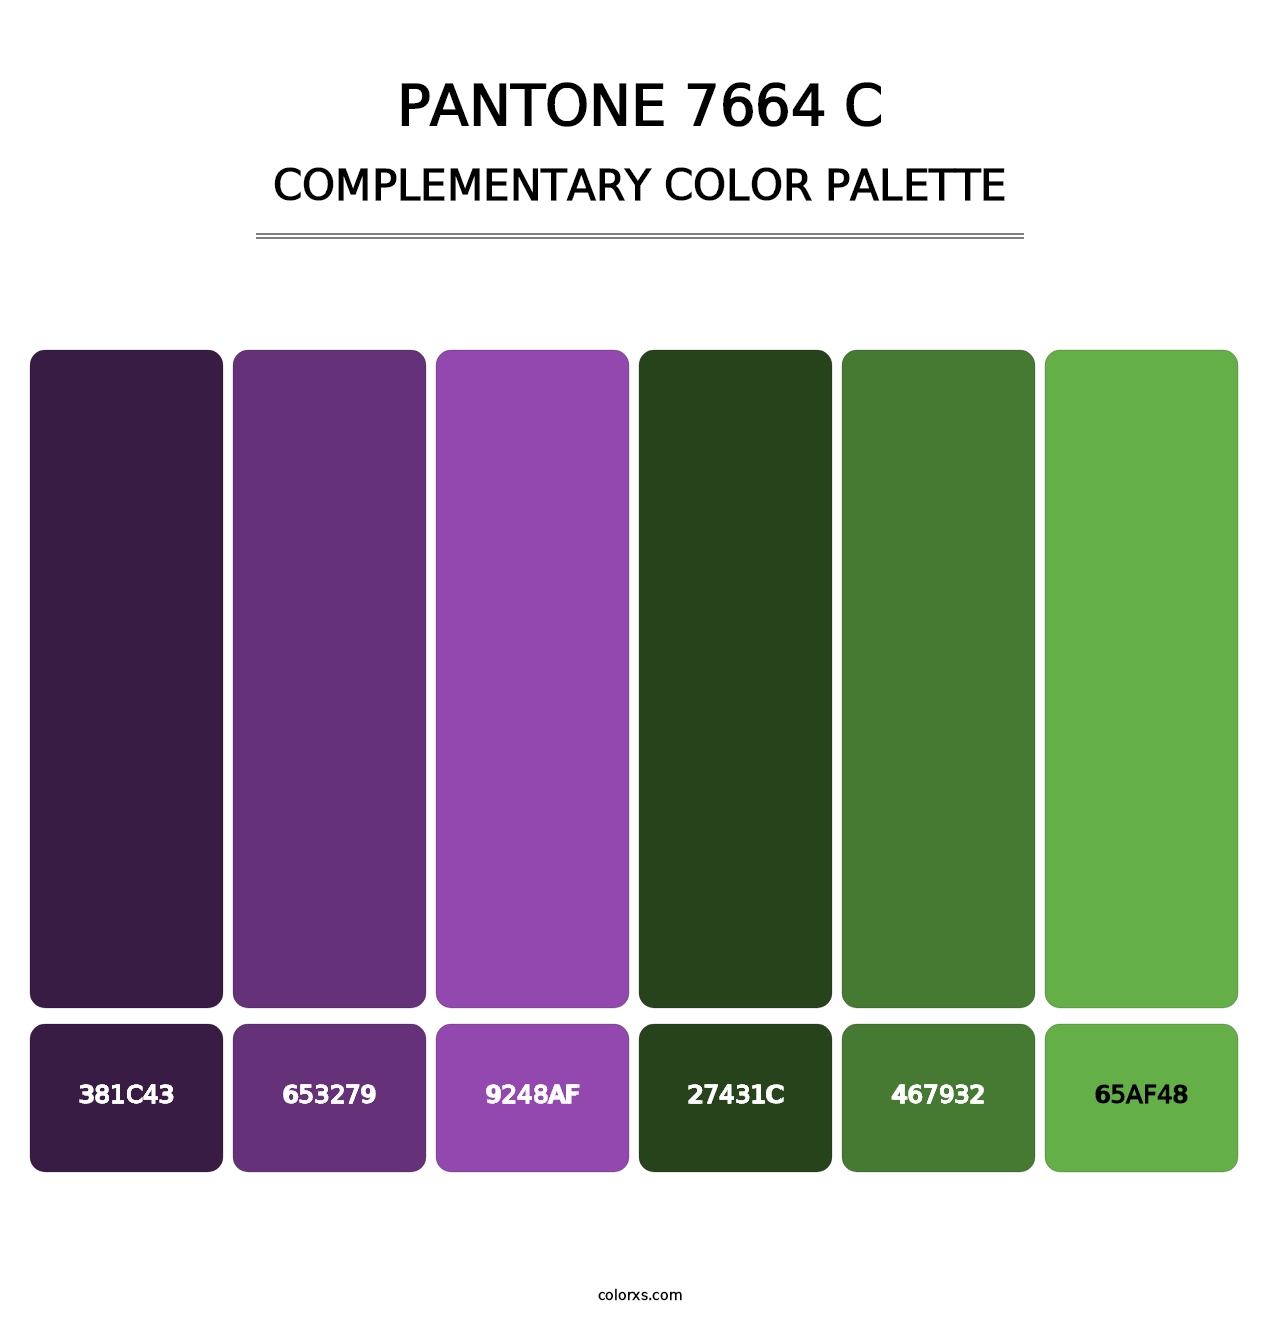 PANTONE 7664 C - Complementary Color Palette